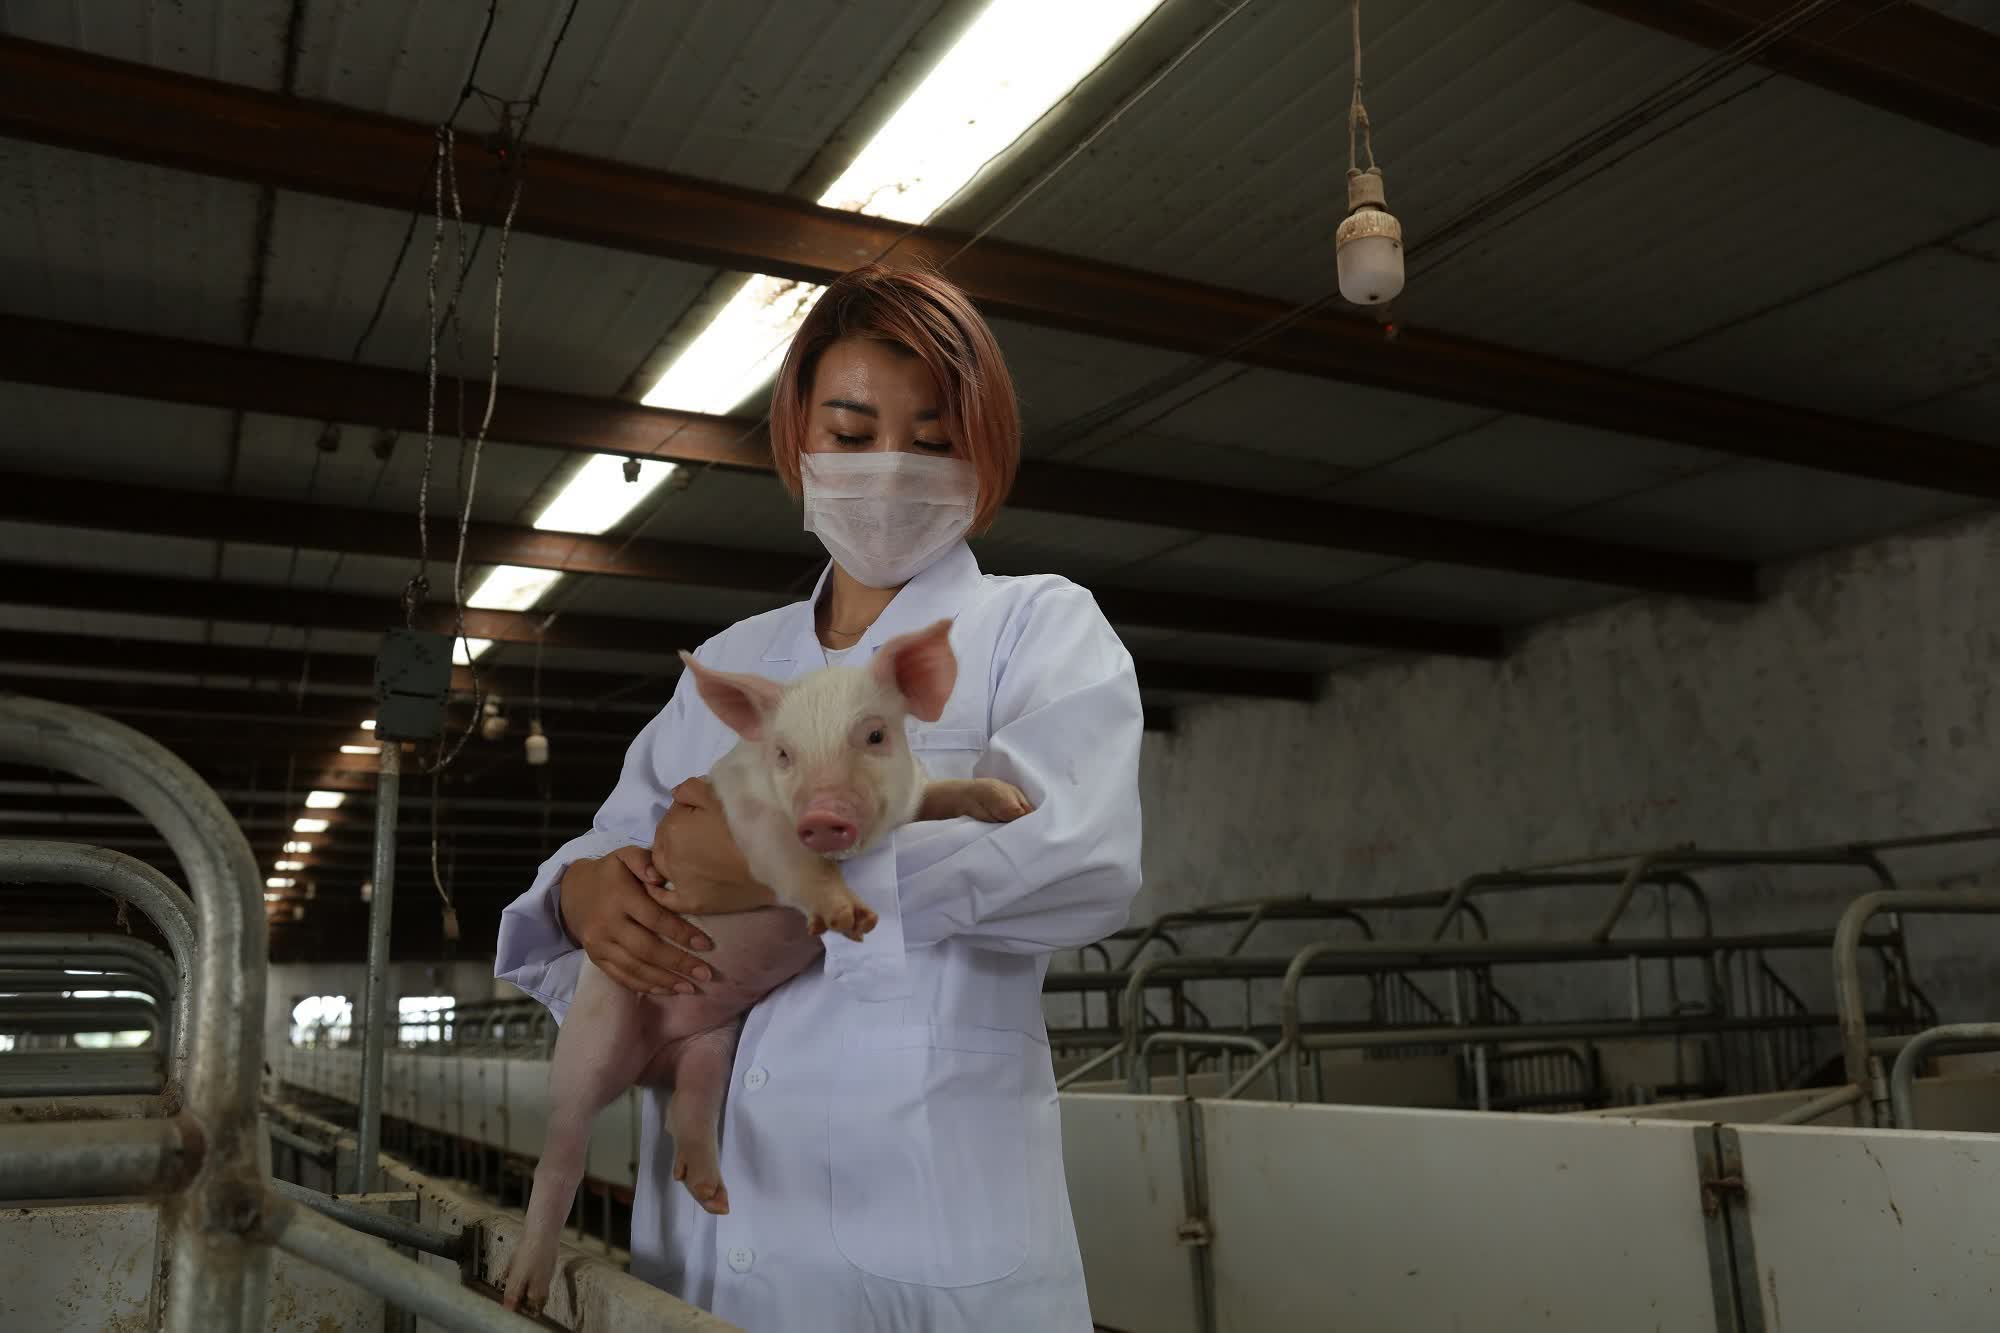 Huawei's solution to crashing smartphone sales? Pig farming